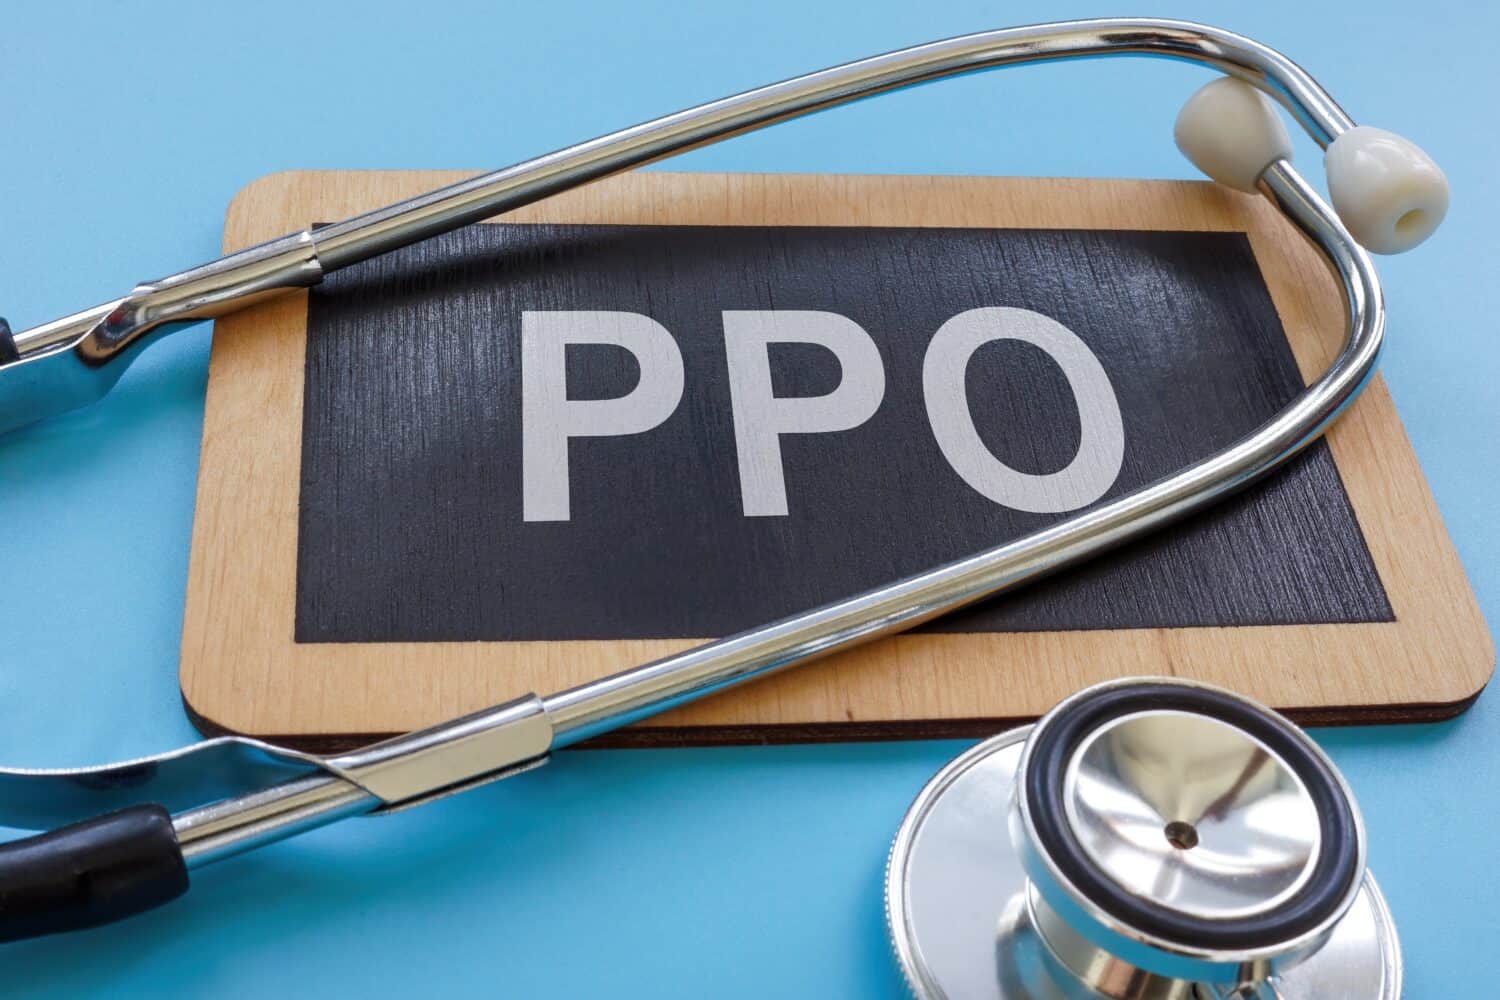 A Plate with abbreviation PPO preferred provider organization or health insurance plan.